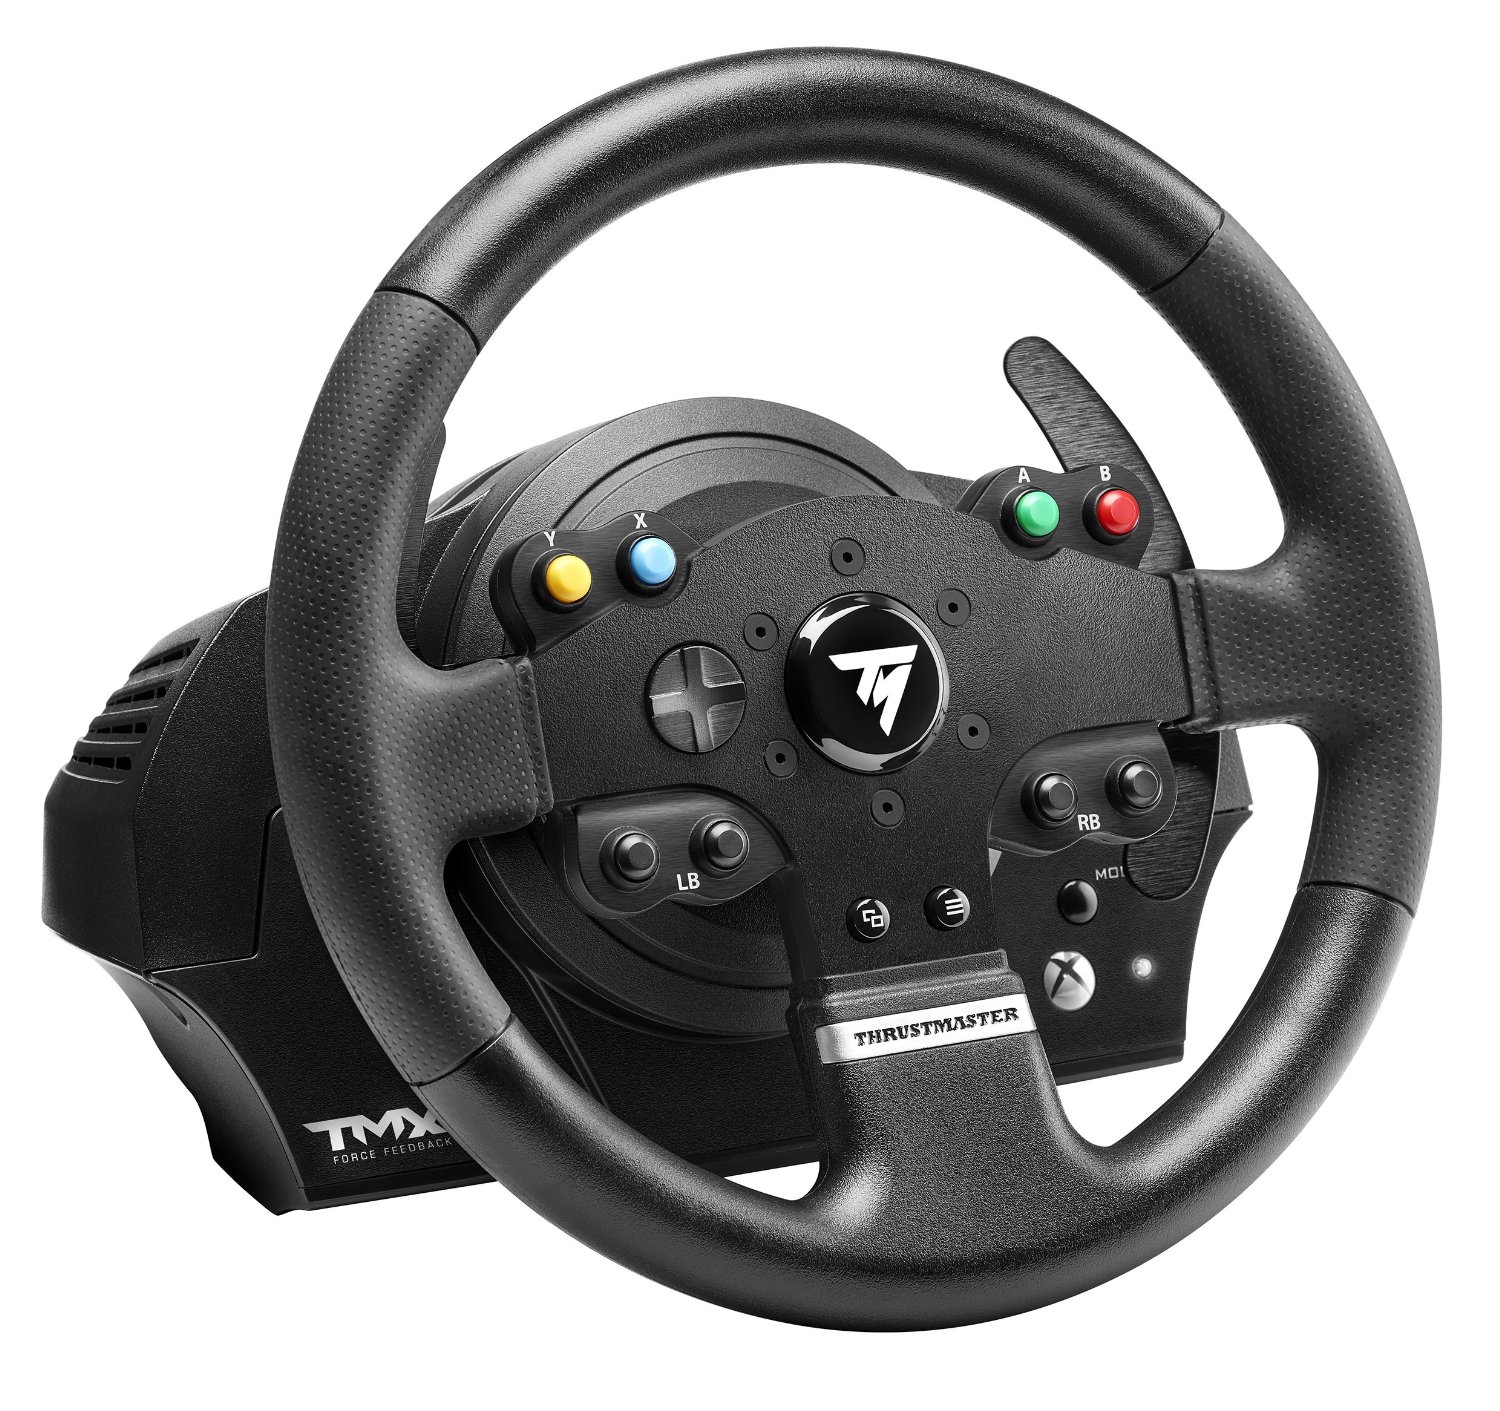 Thrustmaster steering wheel driver for mac